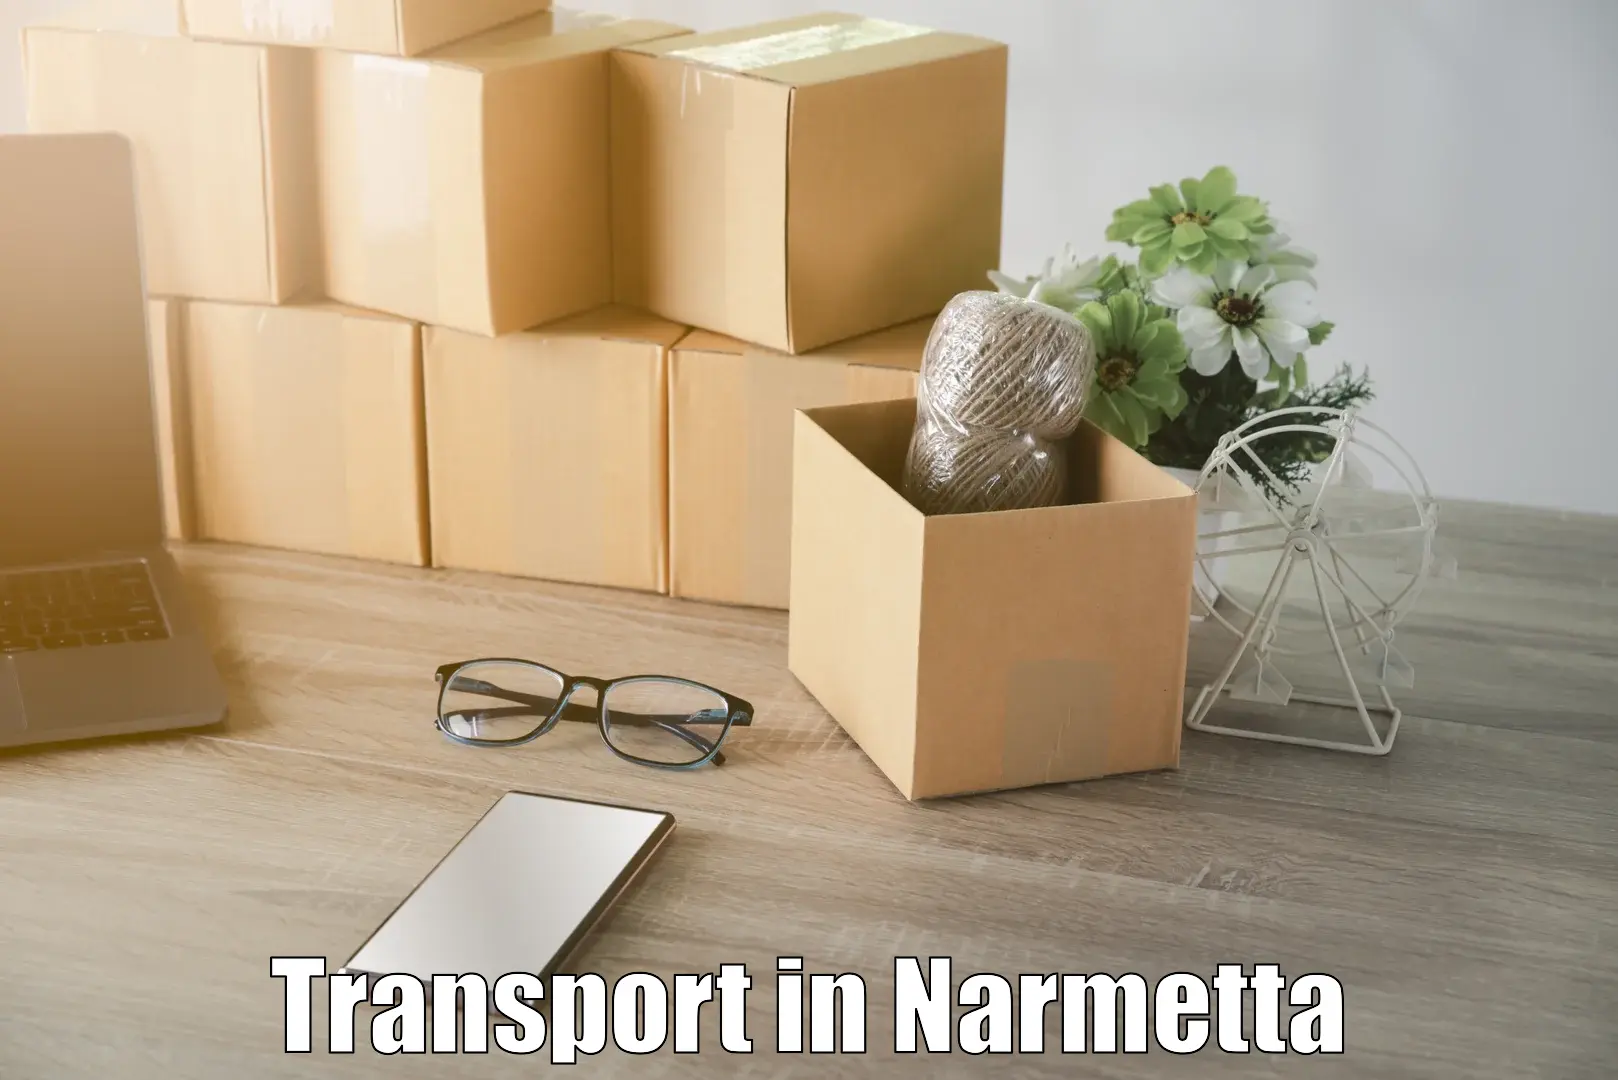 Interstate goods transport in Narmetta